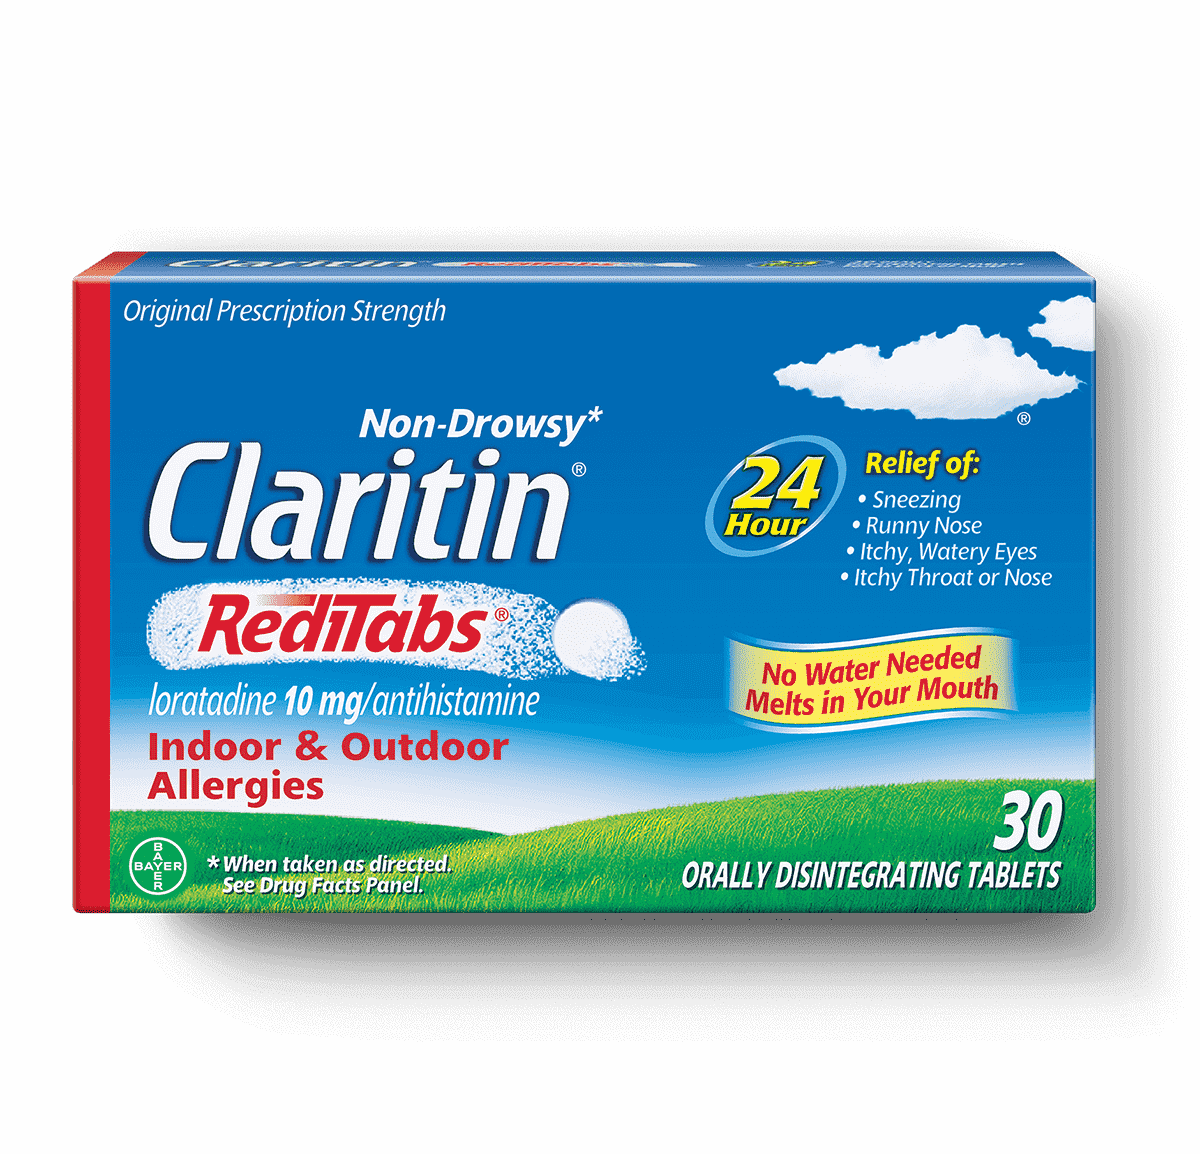 10 mg claritin pill image